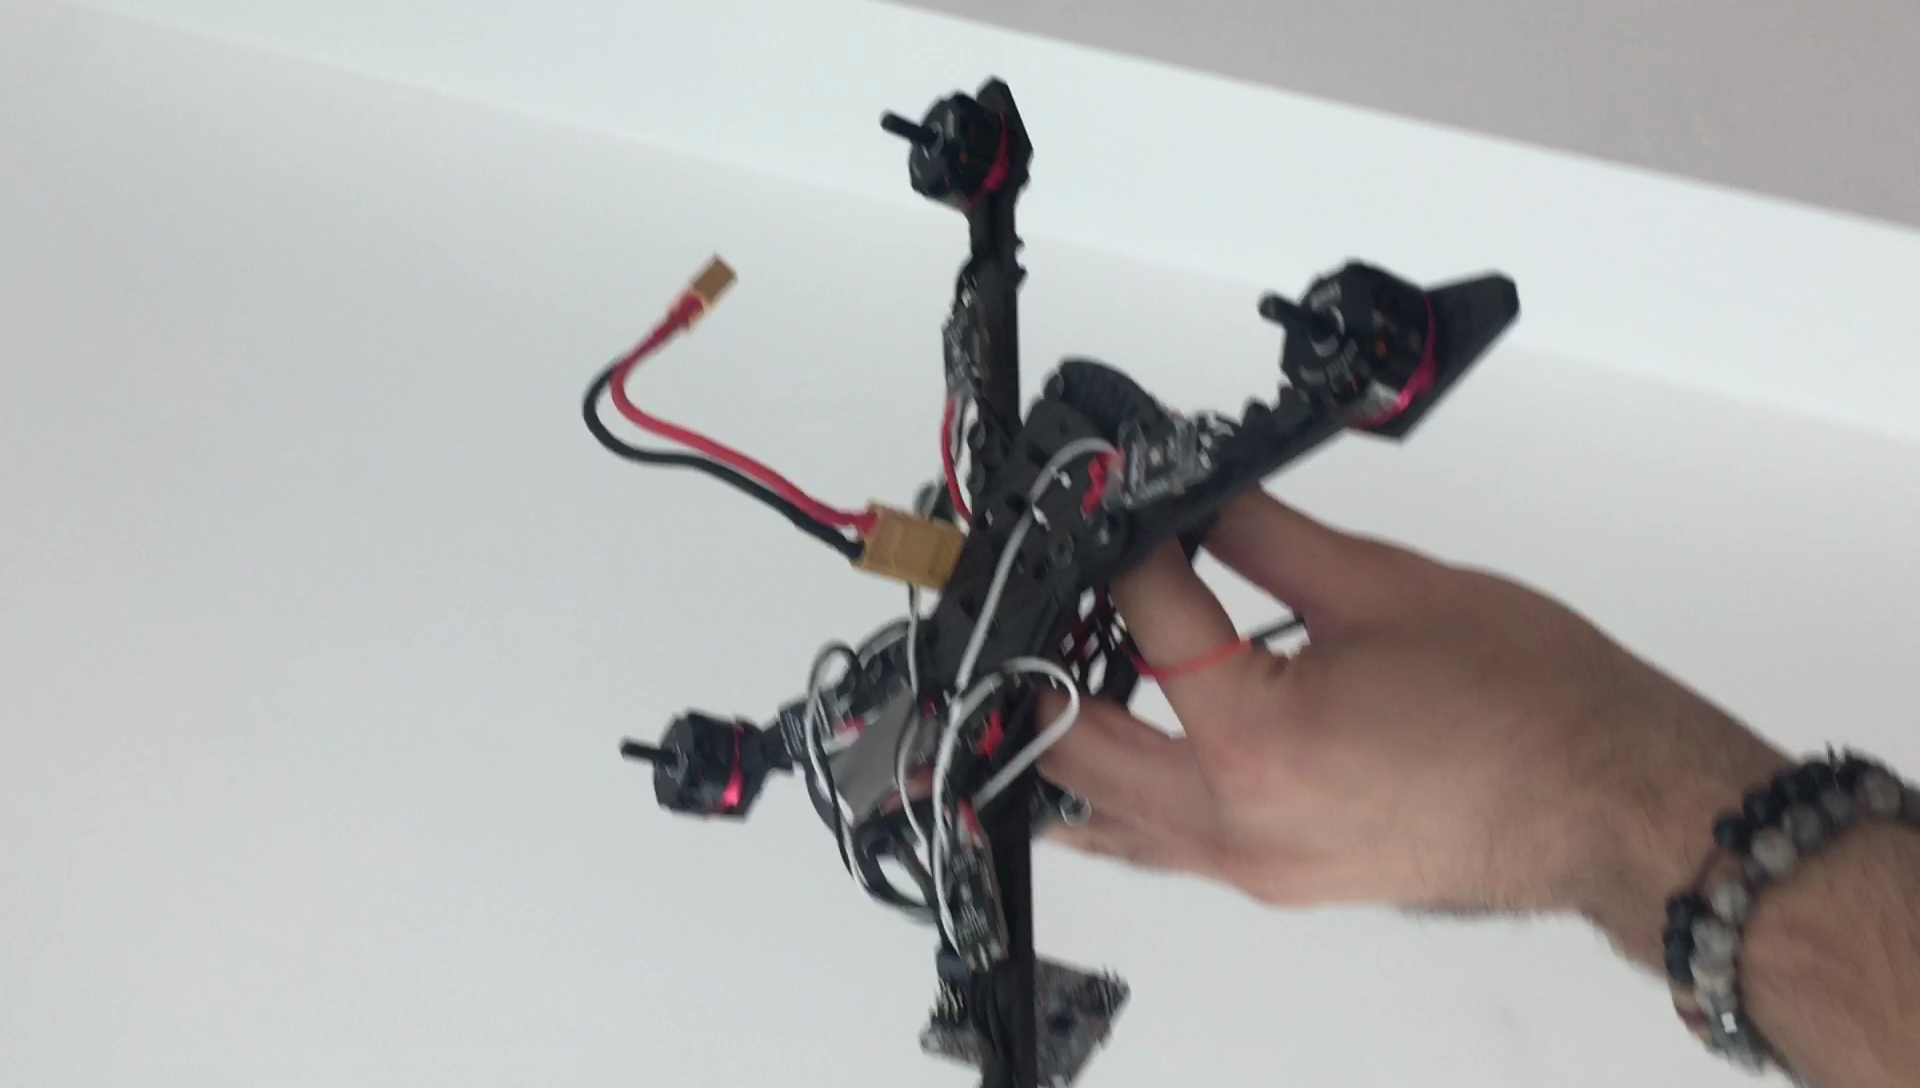 DJI Mavic | The Personal Drone To Dash GoPro Dreams